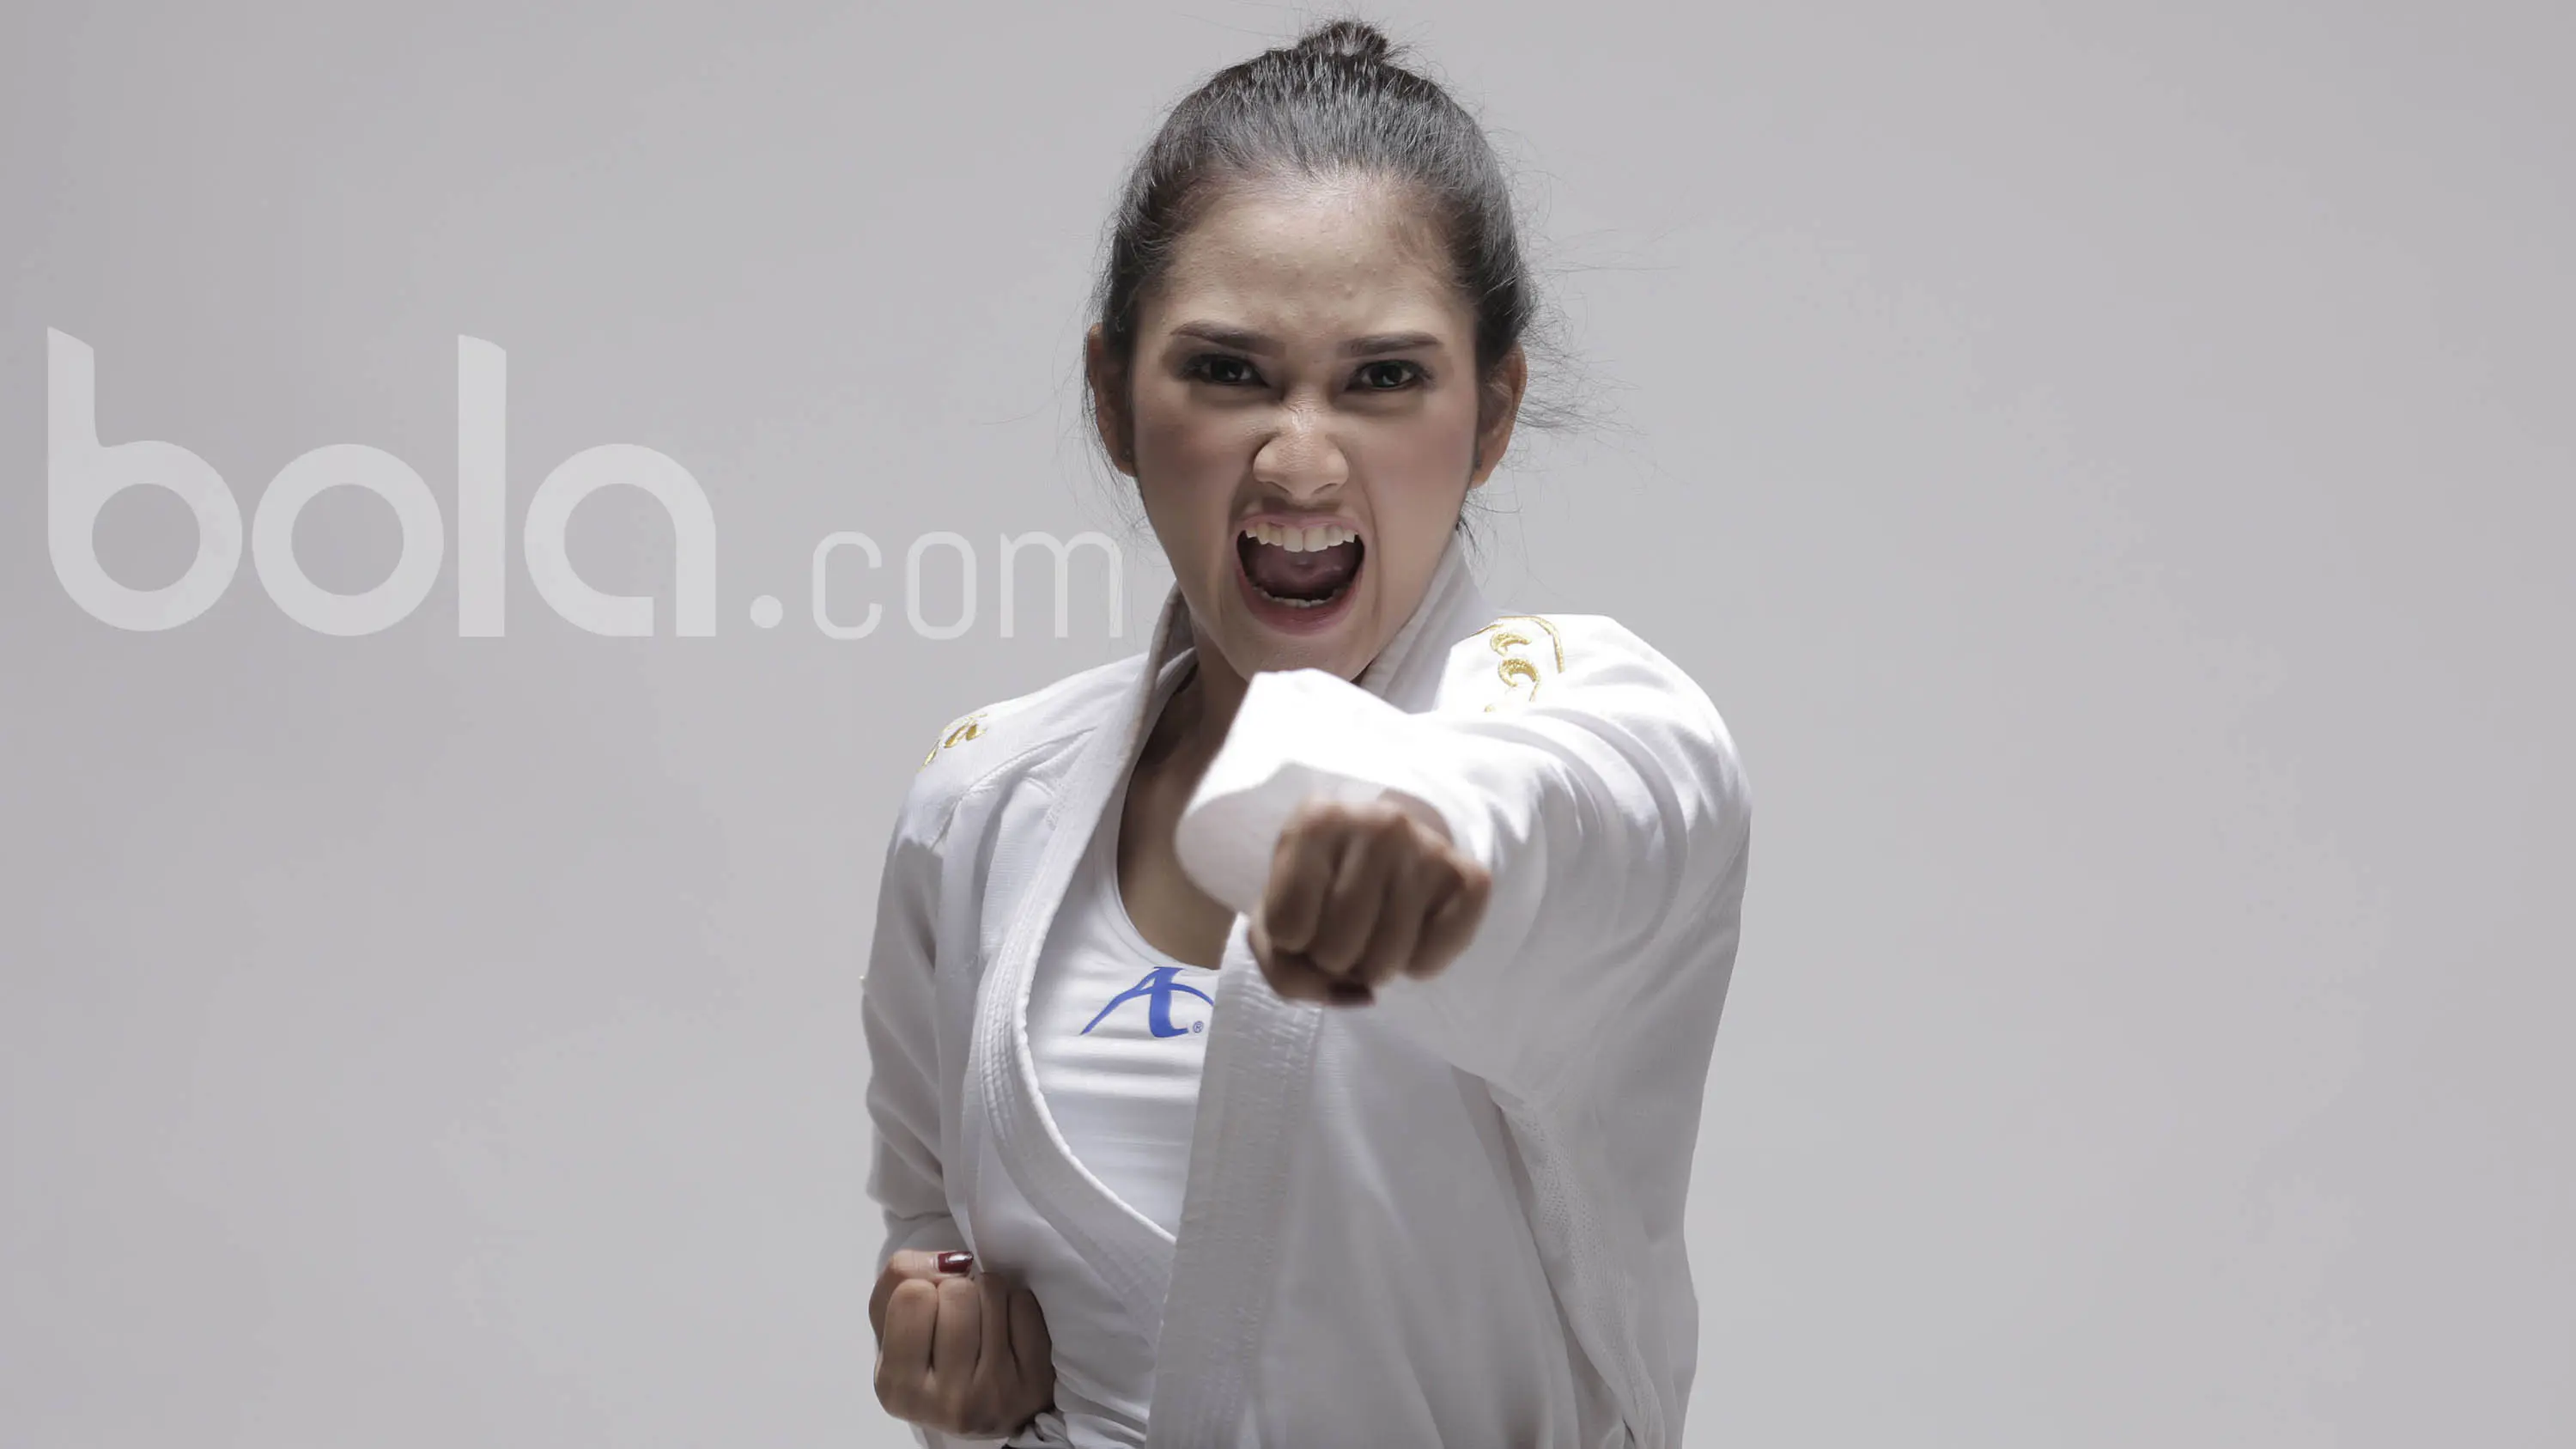 Karateka Indonesia, Claresta Taufan, saat menjalani sesi foto di Studio Boloa.com, Jakarta, Minggu (26/3/2017). (Bola.com/Peksi Cahyo)